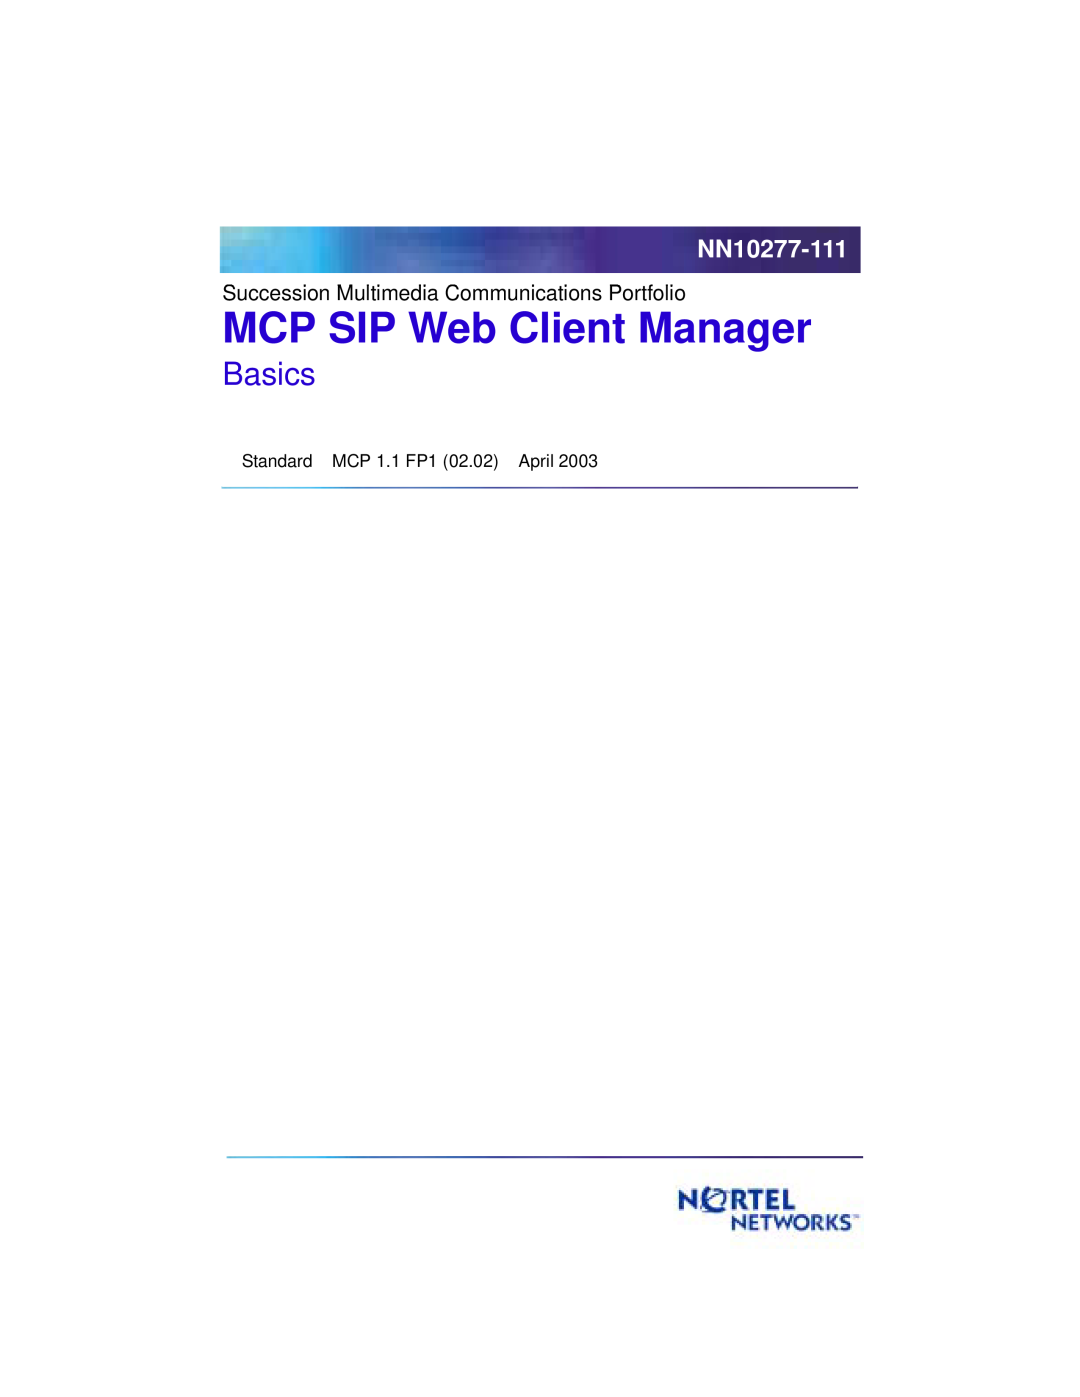 Nortel Networks NN10277-111 manual MCP SIP Web Client Manager, Basics, Standard MCP 1.1 FP1 02.02 April 